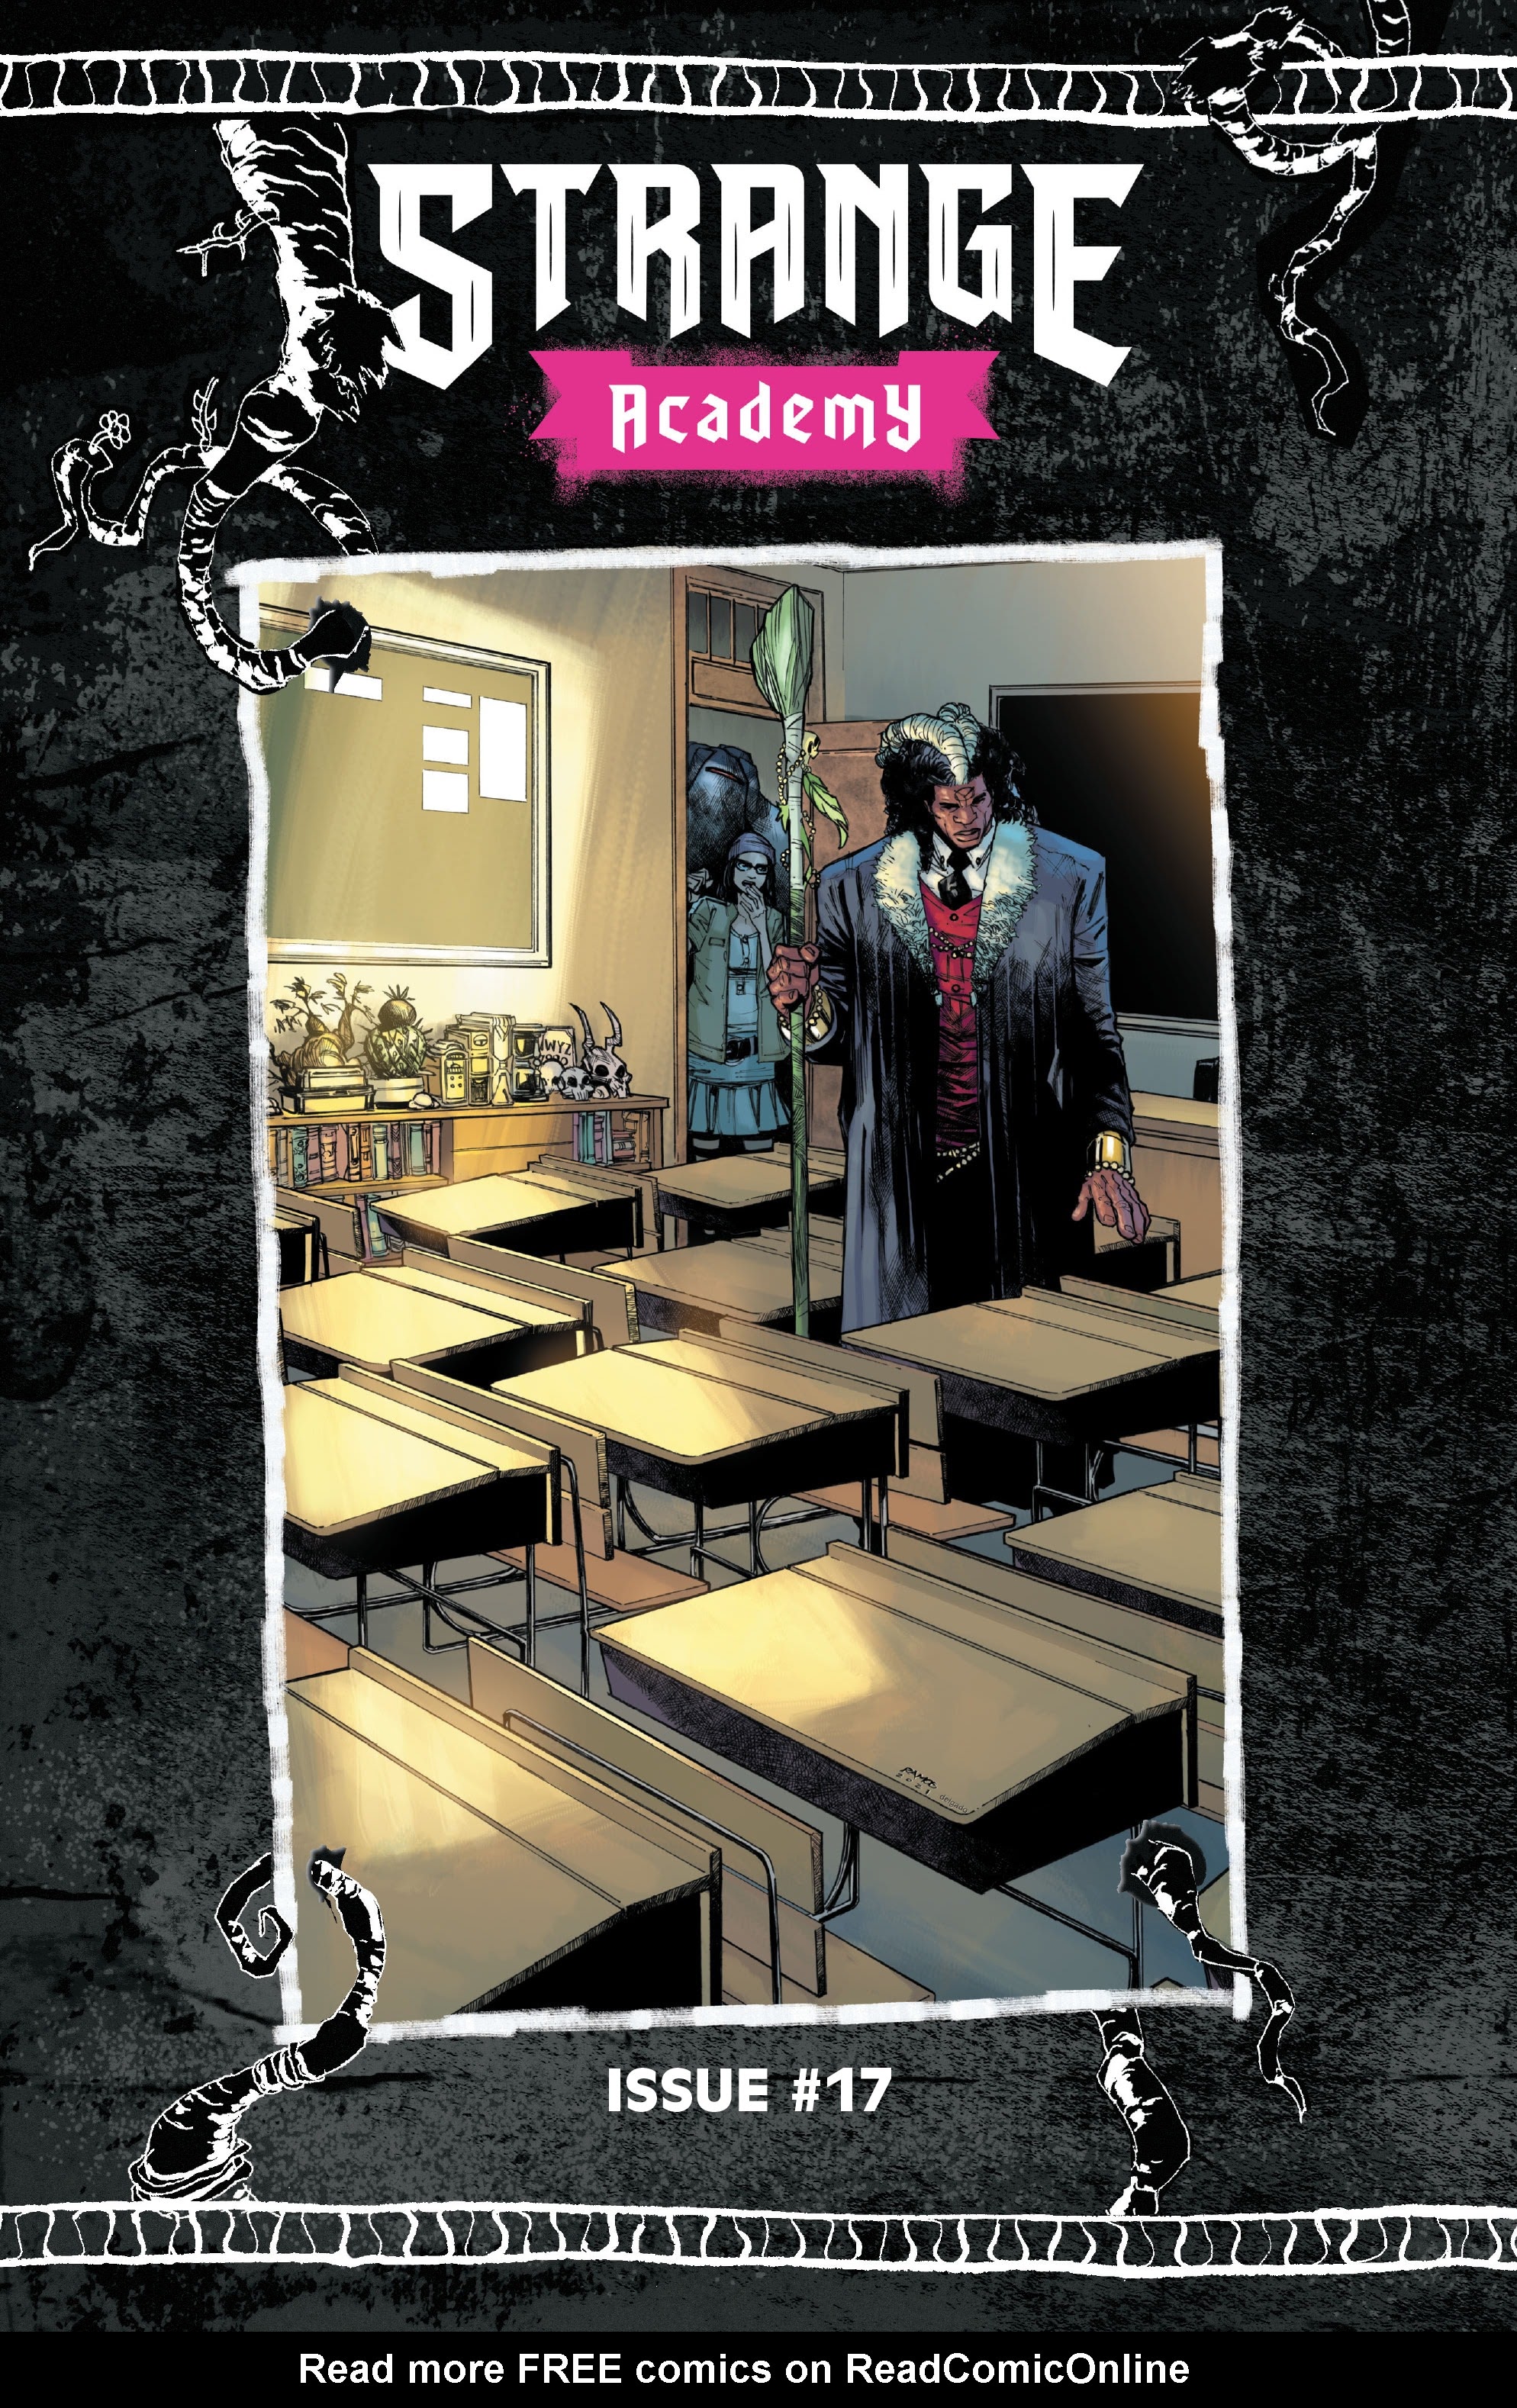 Read online Strange Academy comic -  Issue #16 - 25